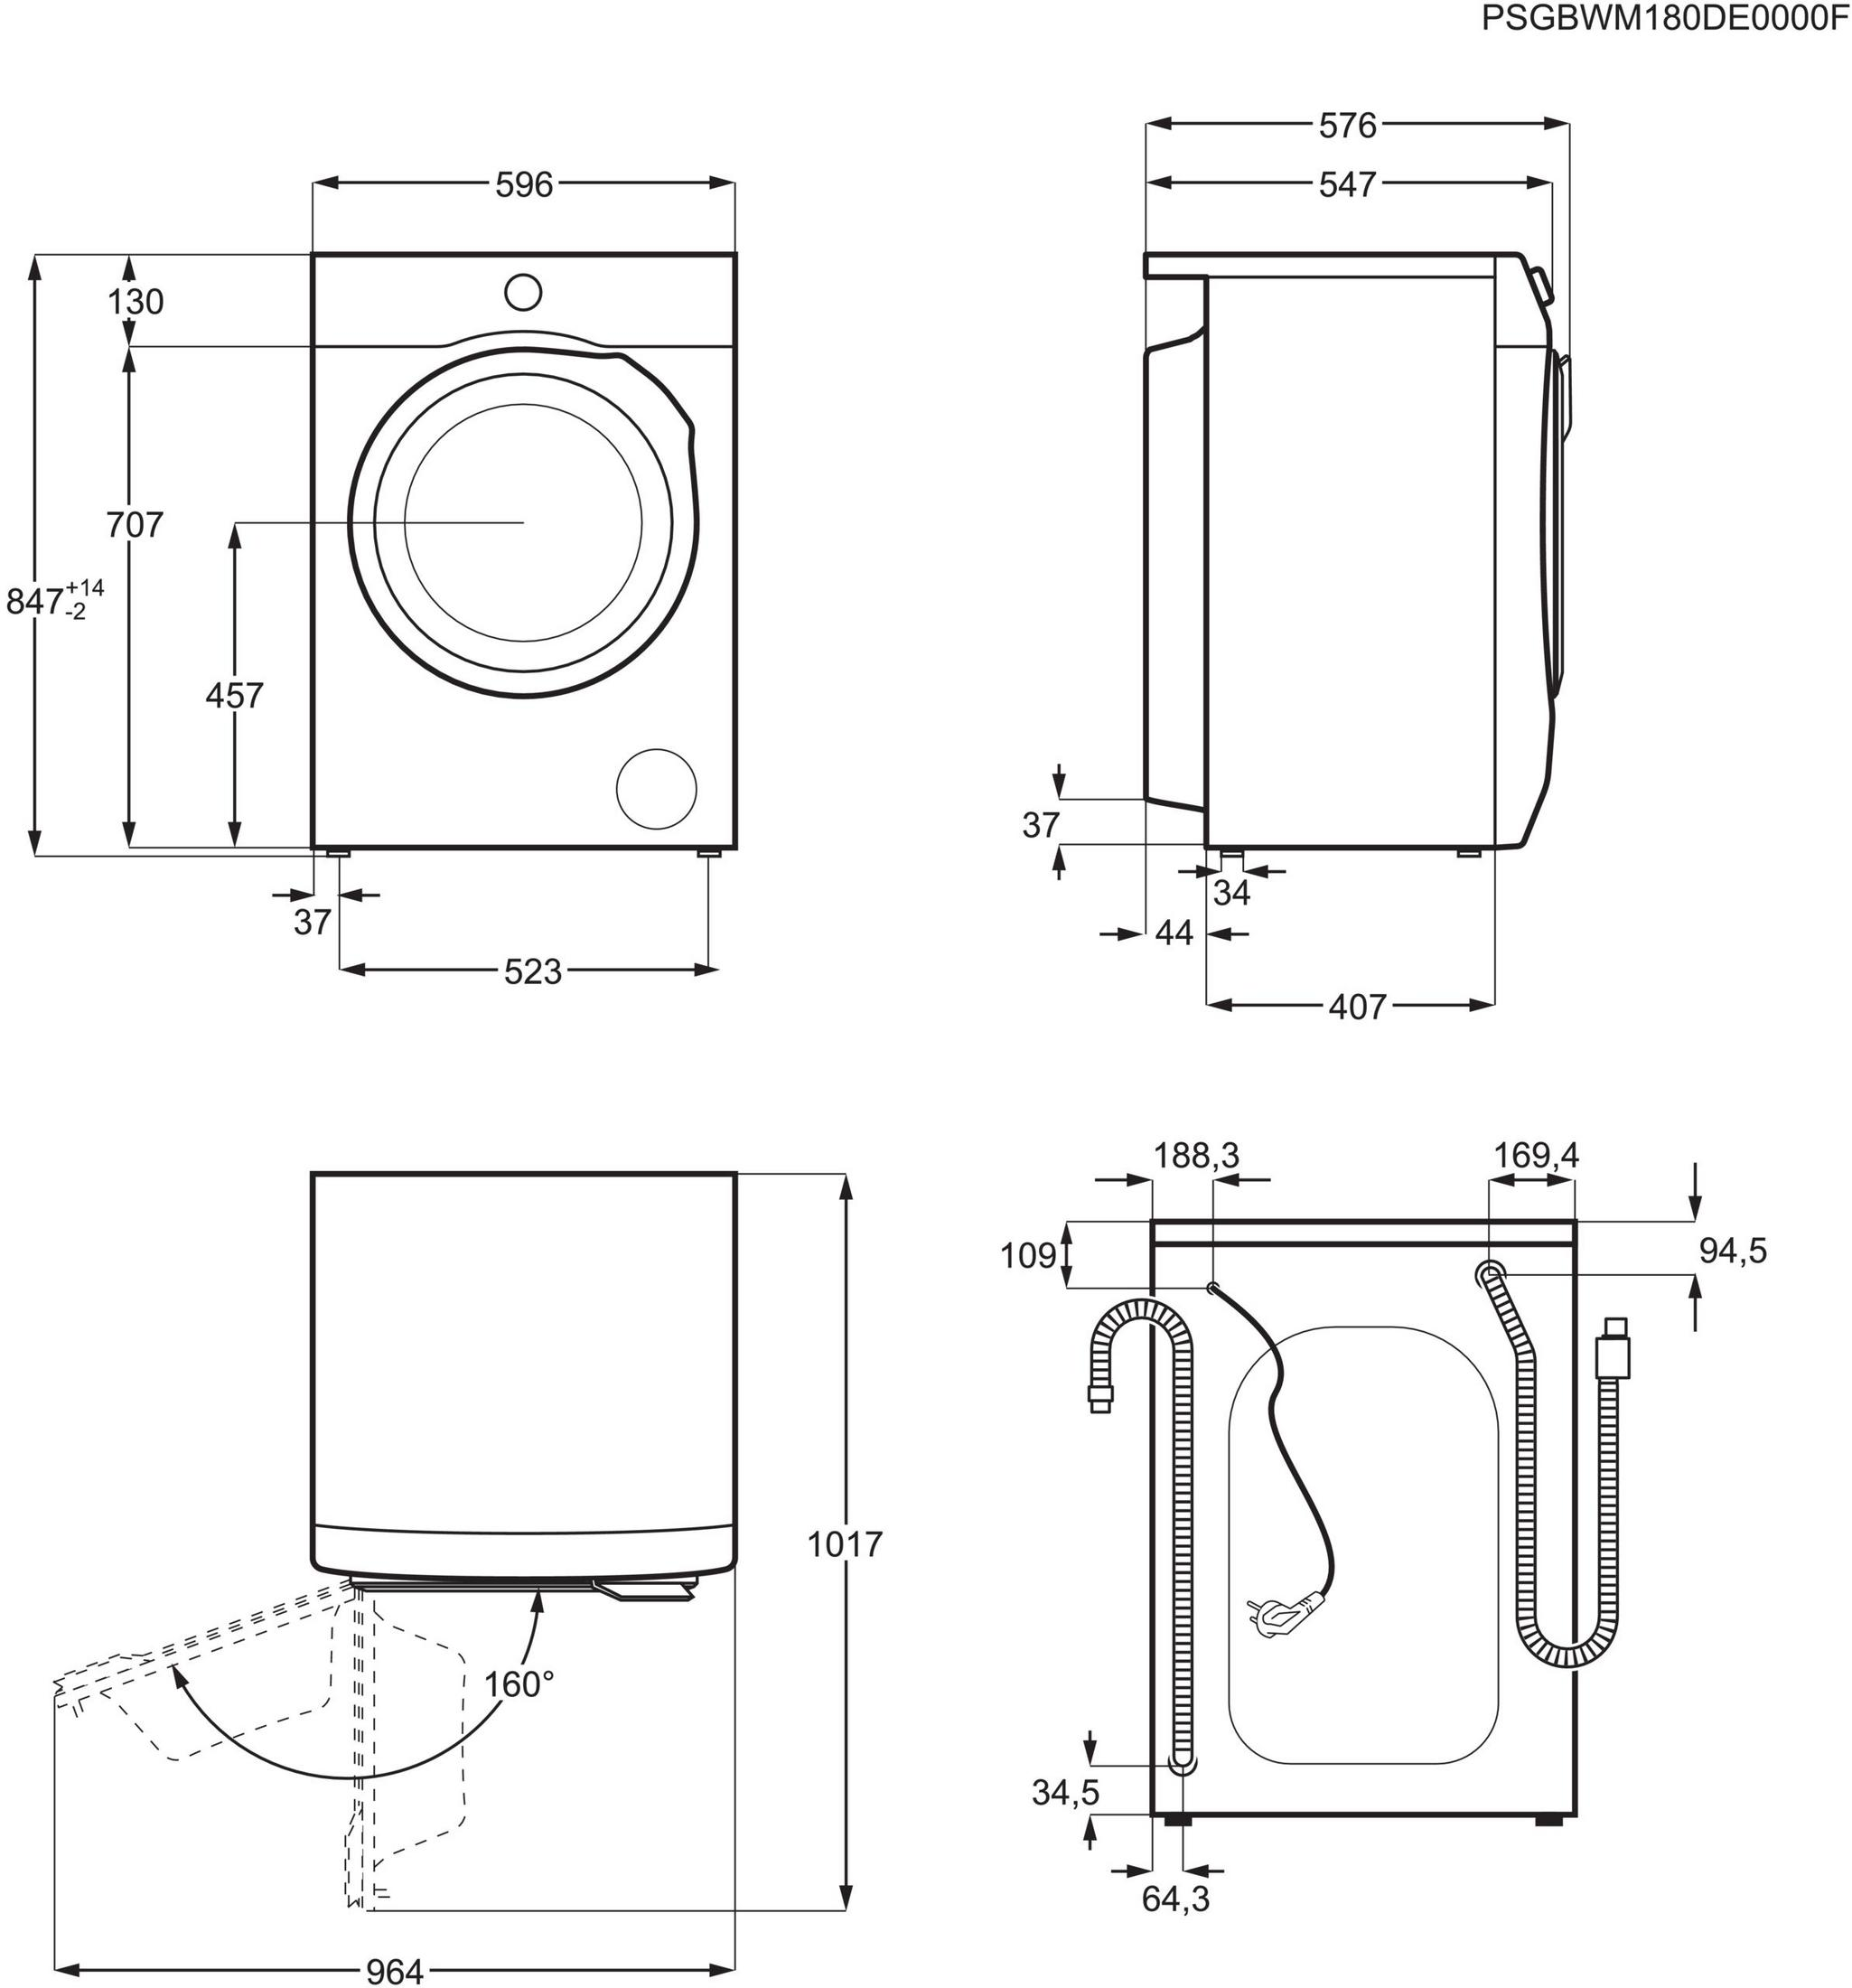 L Serie ProSense® kg, AEG Waschmaschine FBA A) mit U/Min., Mengenautomatik 6 (8 51680 1551 6000